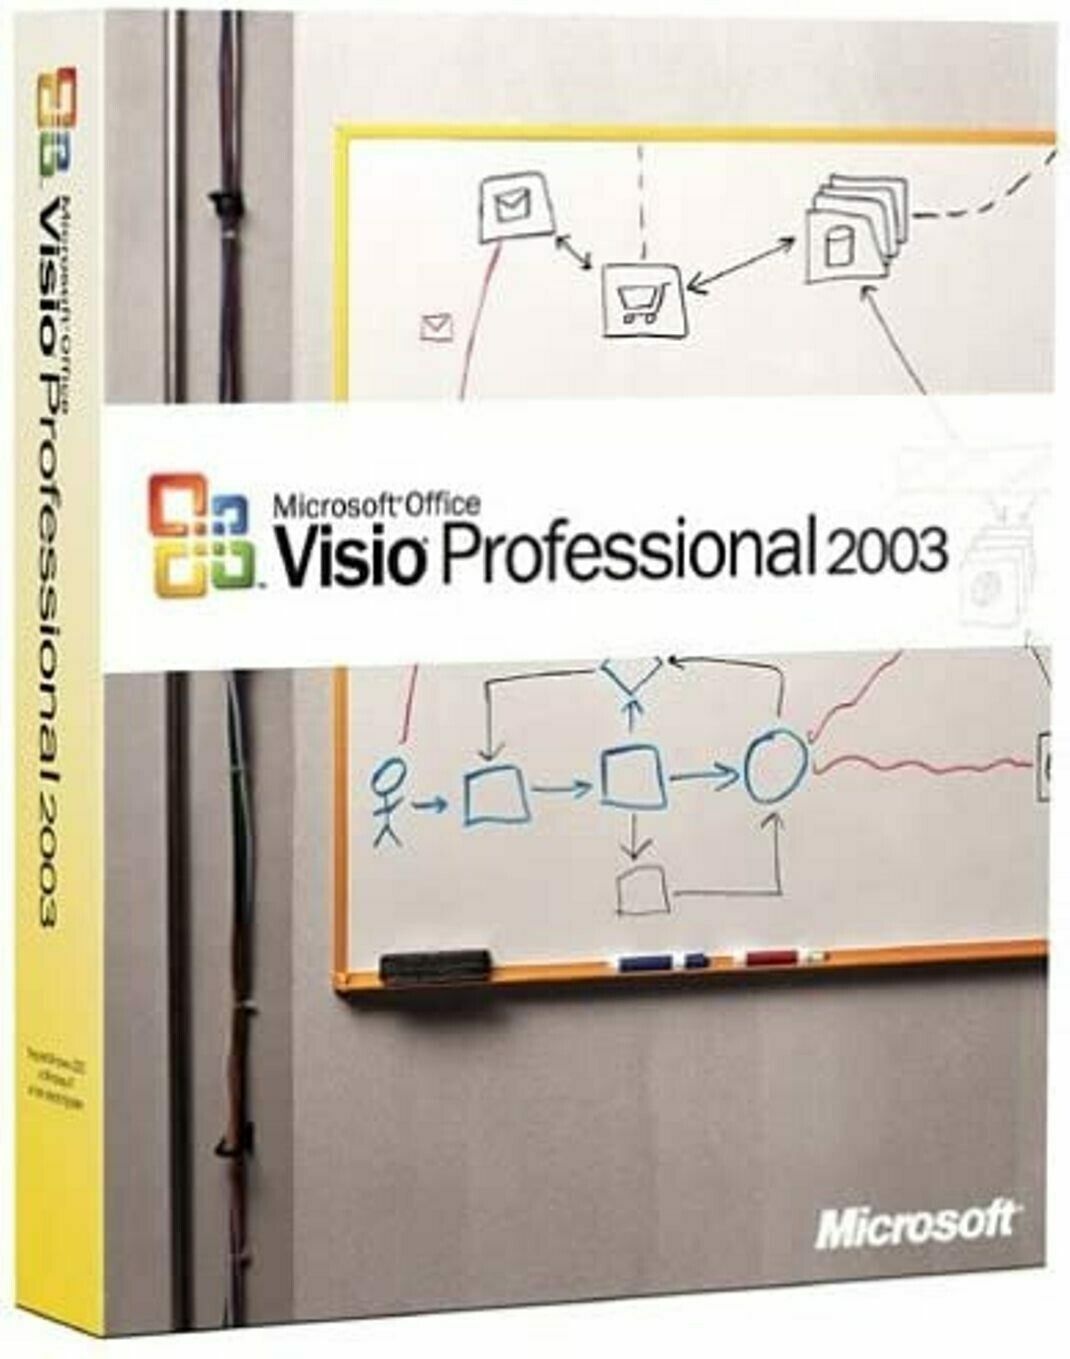 Microsoft Office Visio Professional 2003 Full Version w/ License = NEW =